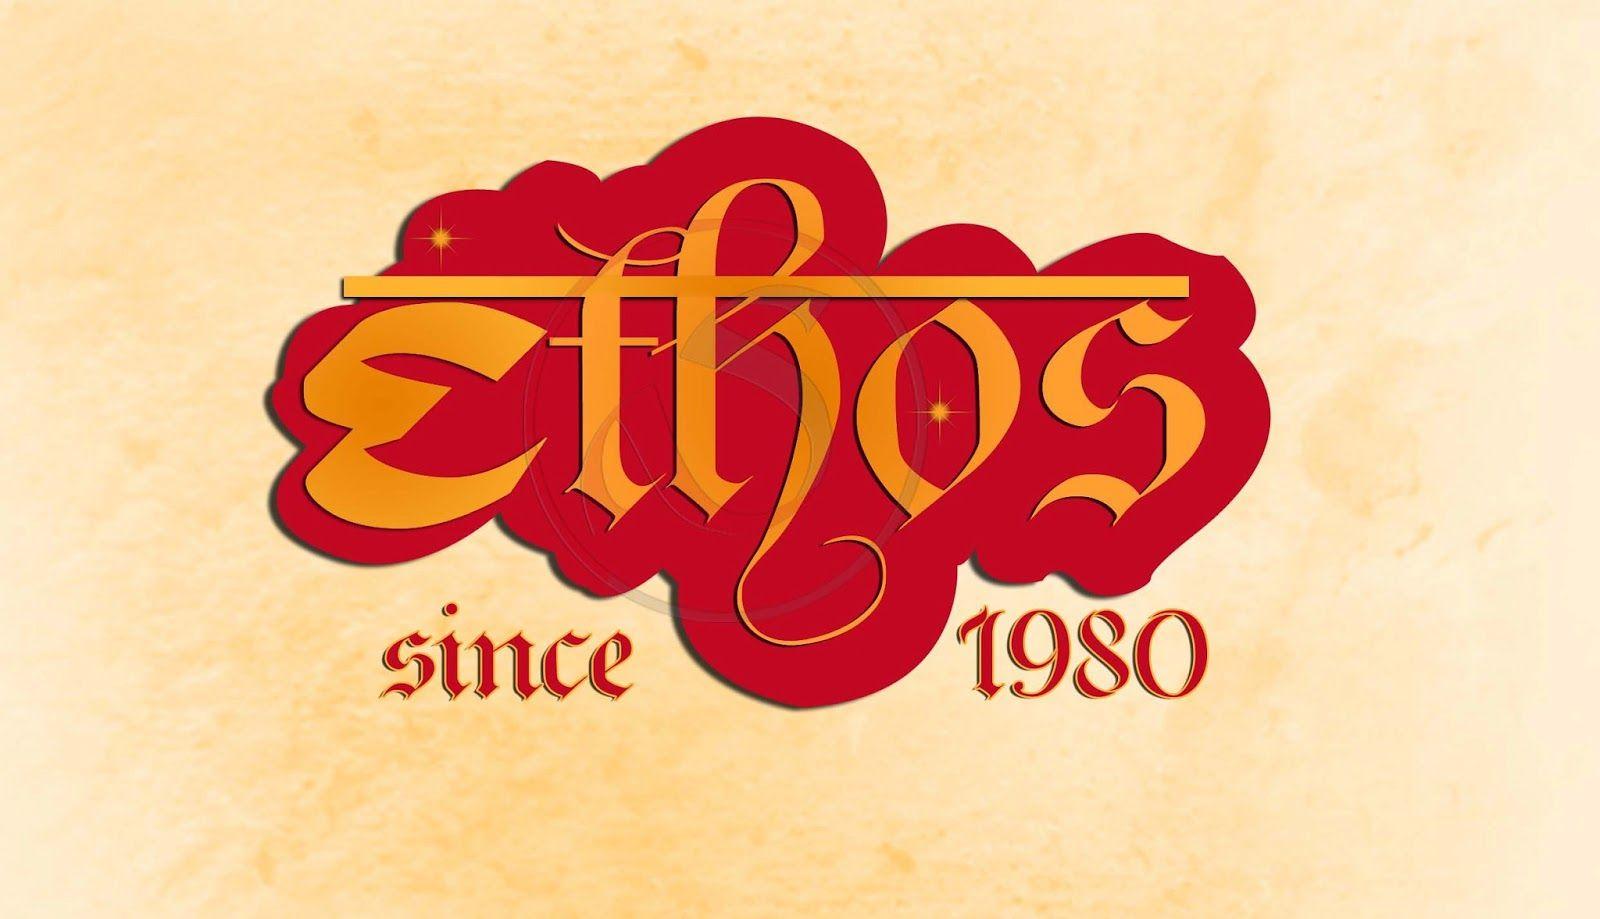 Ethnic Logo - SPEAKING HEART : logo design options for an ethnic wear company ETHOS